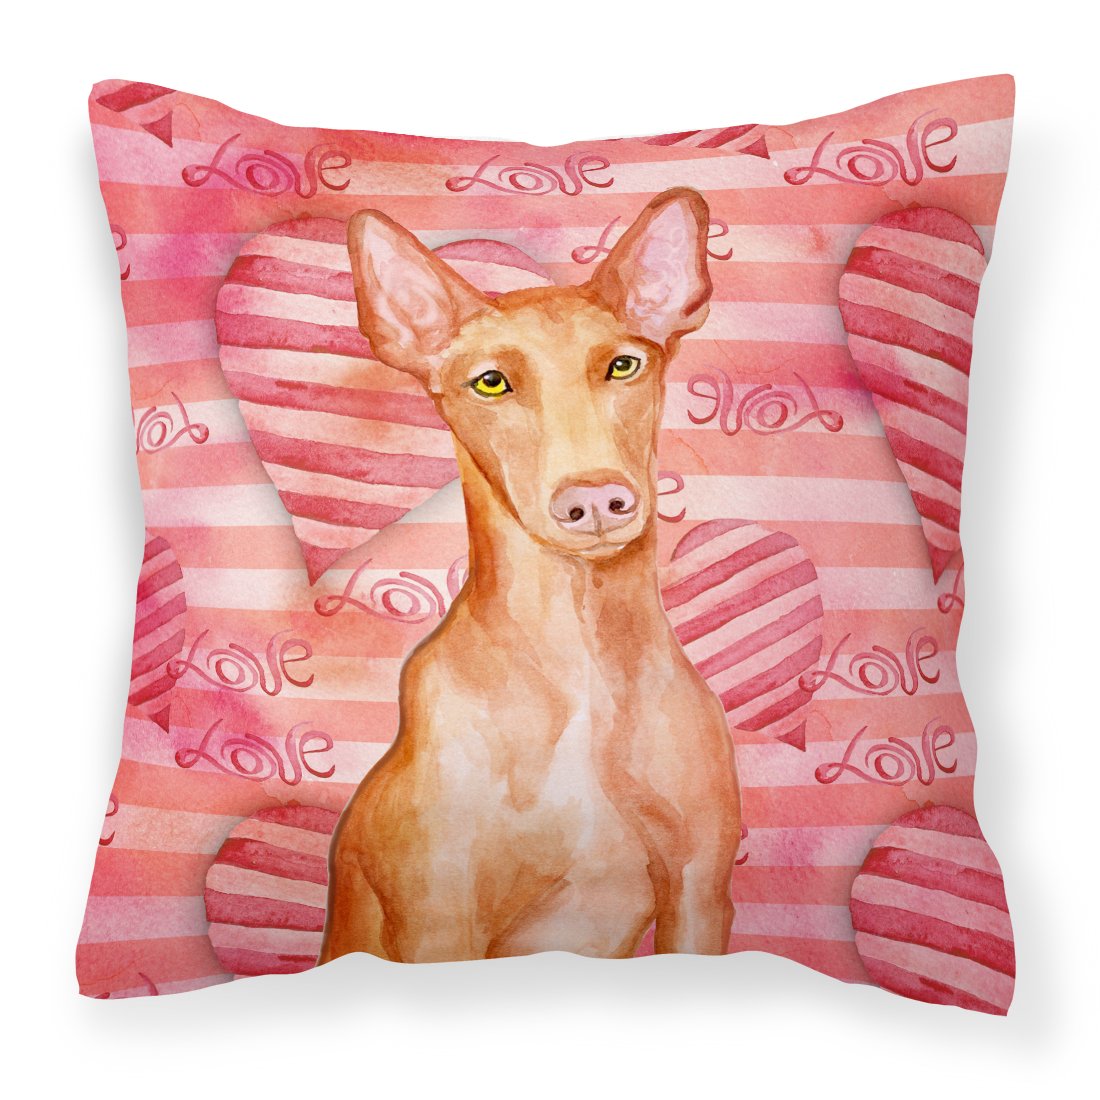 Pharaoh Hound Love Fabric Decorative Pillow BB9802PW1818 by Caroline's Treasures